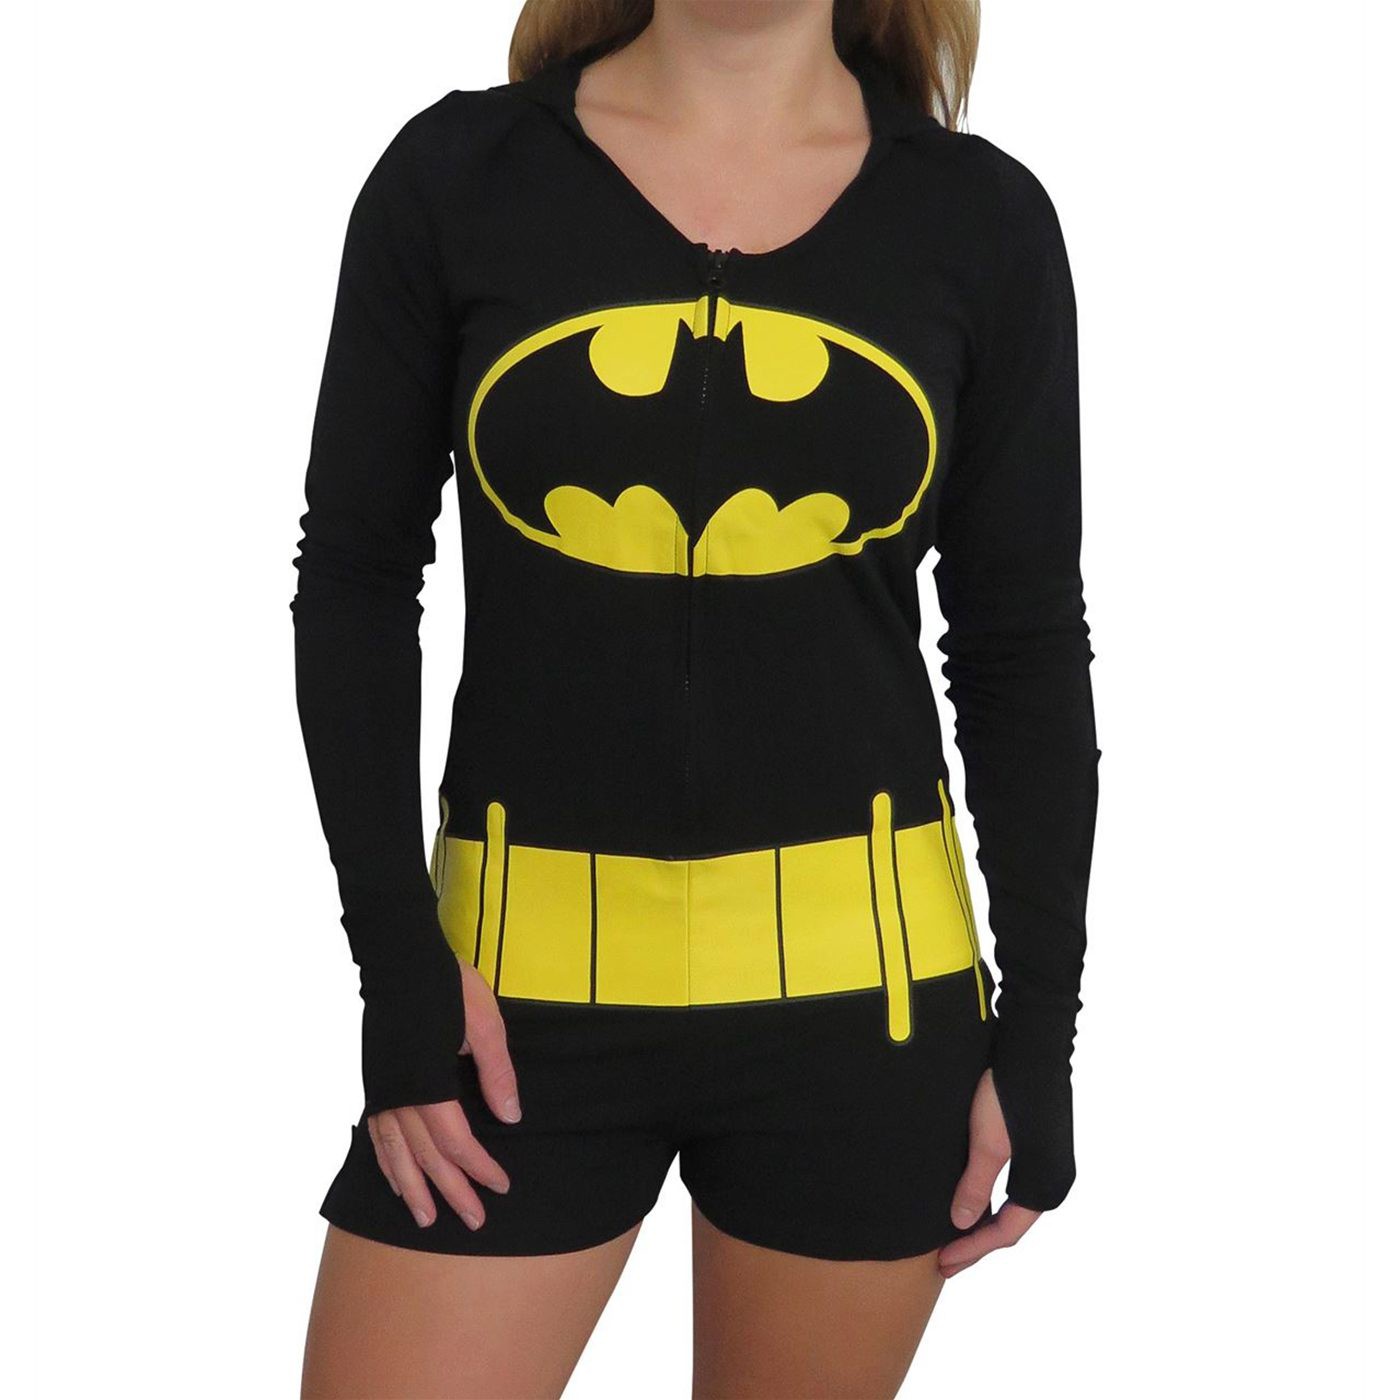 Batman Costume Women's Romper